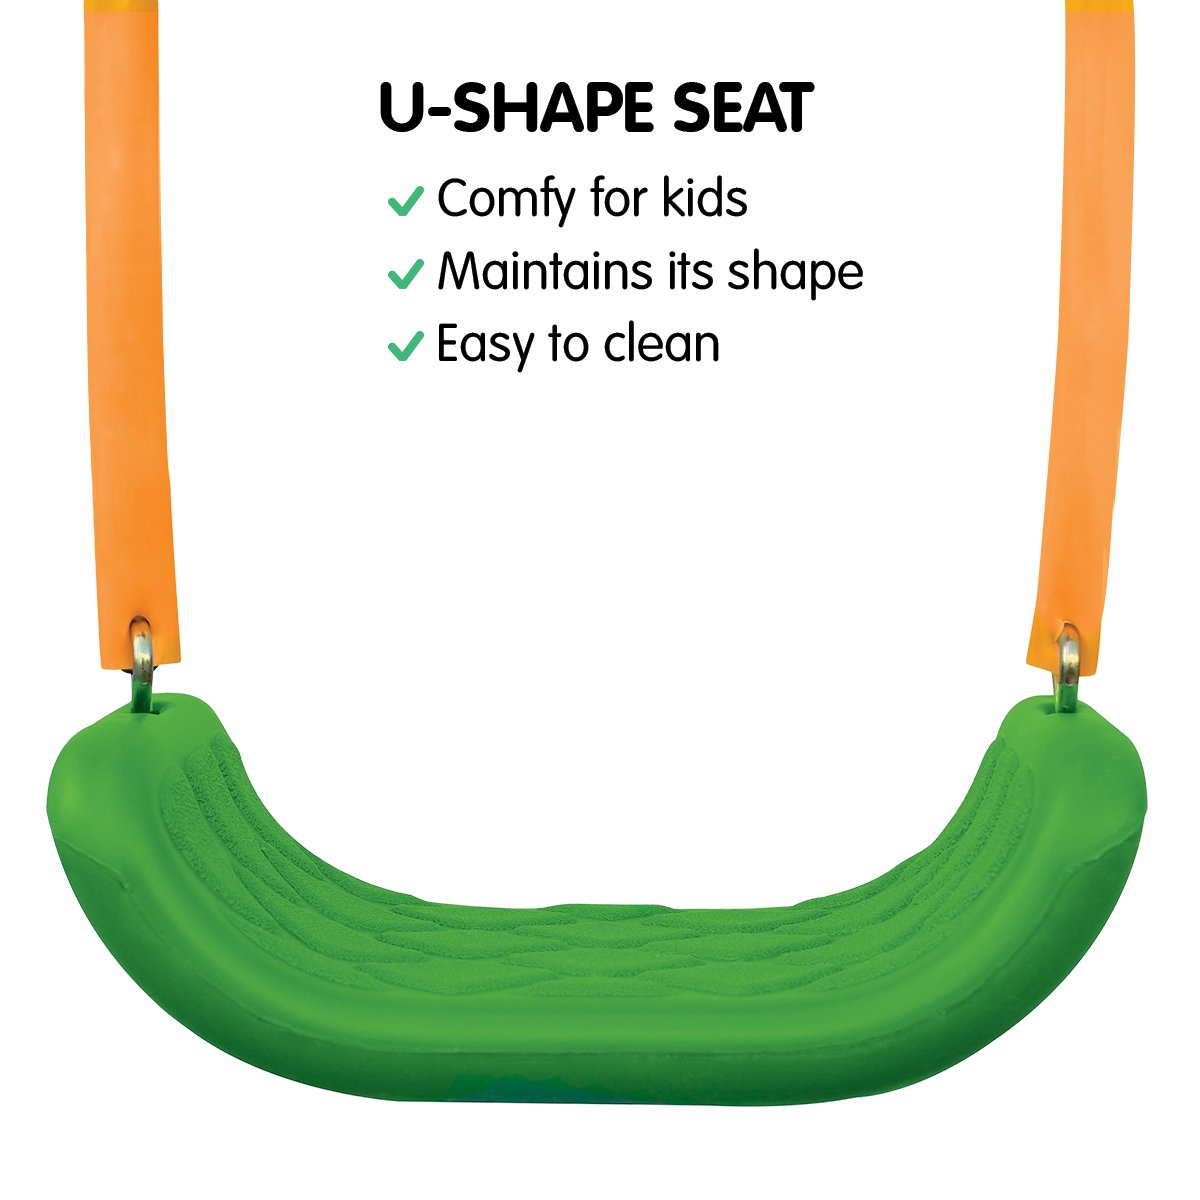 Kahuna Kids 4-Seater Swing Set Purple Green